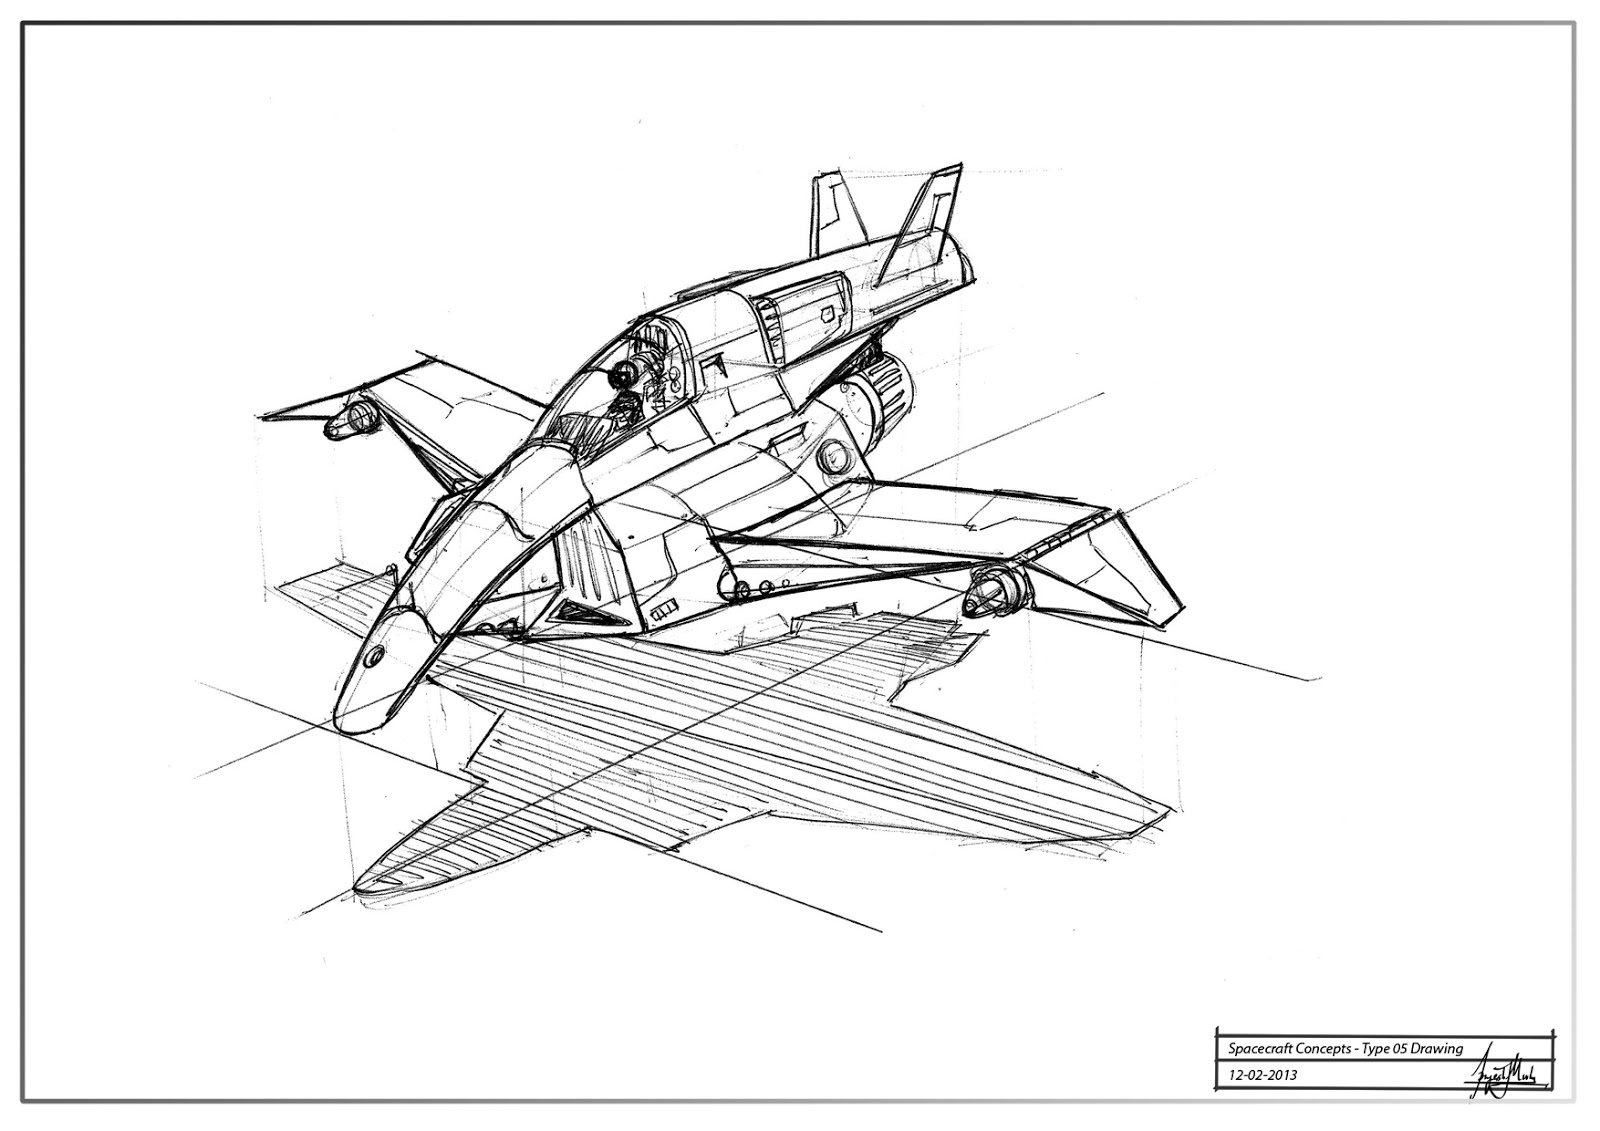 grandpriy: Concept Design Spacecraft Drawings